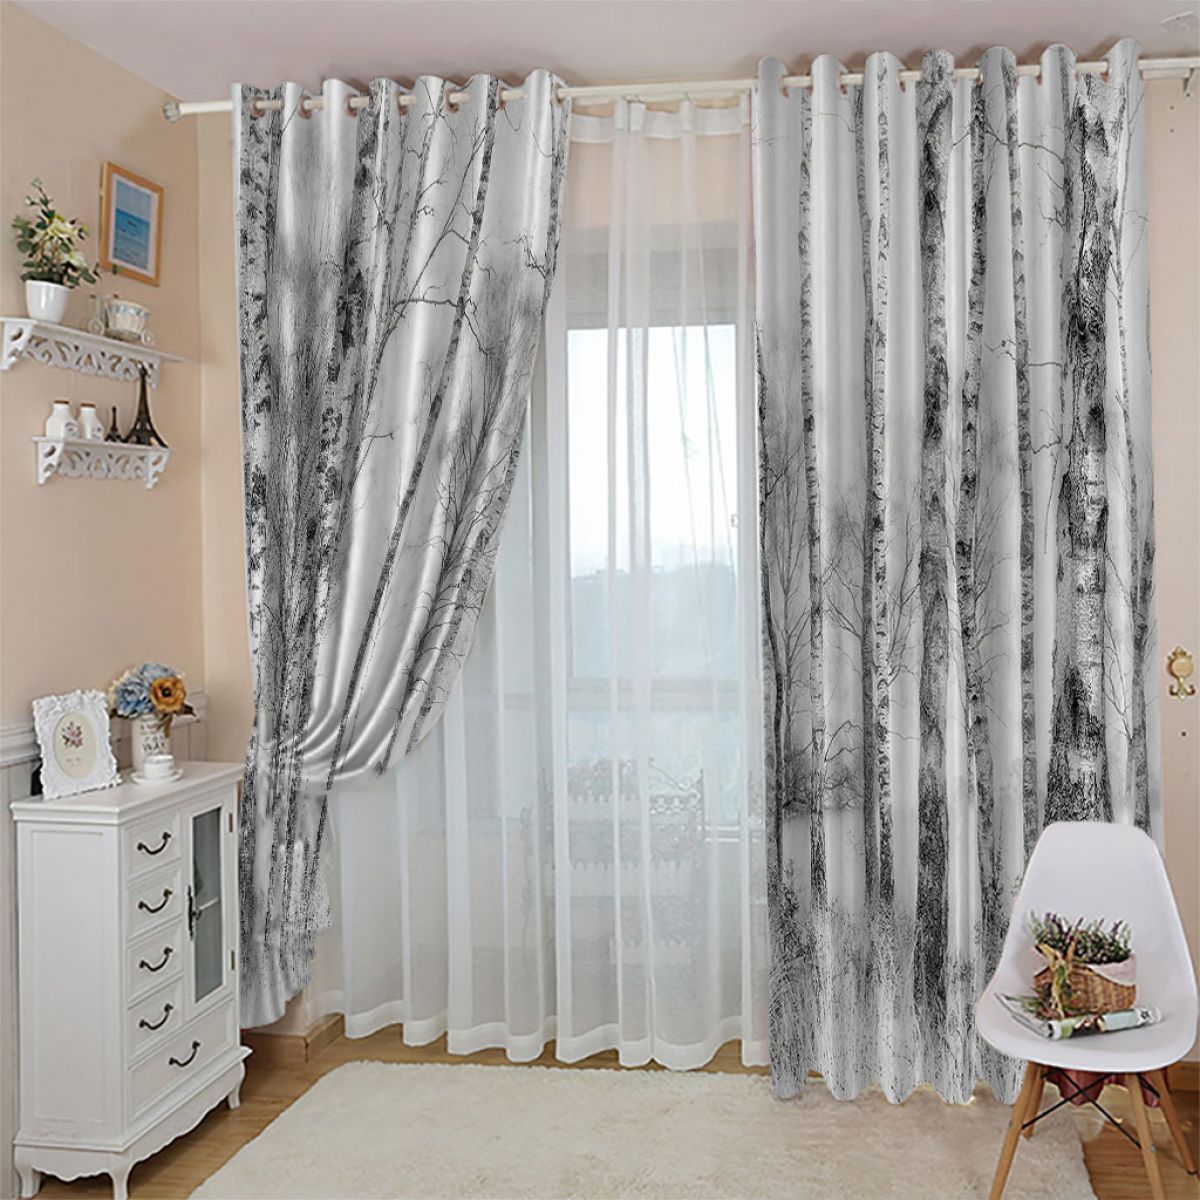 gray trees printed window curtain home decor 8207